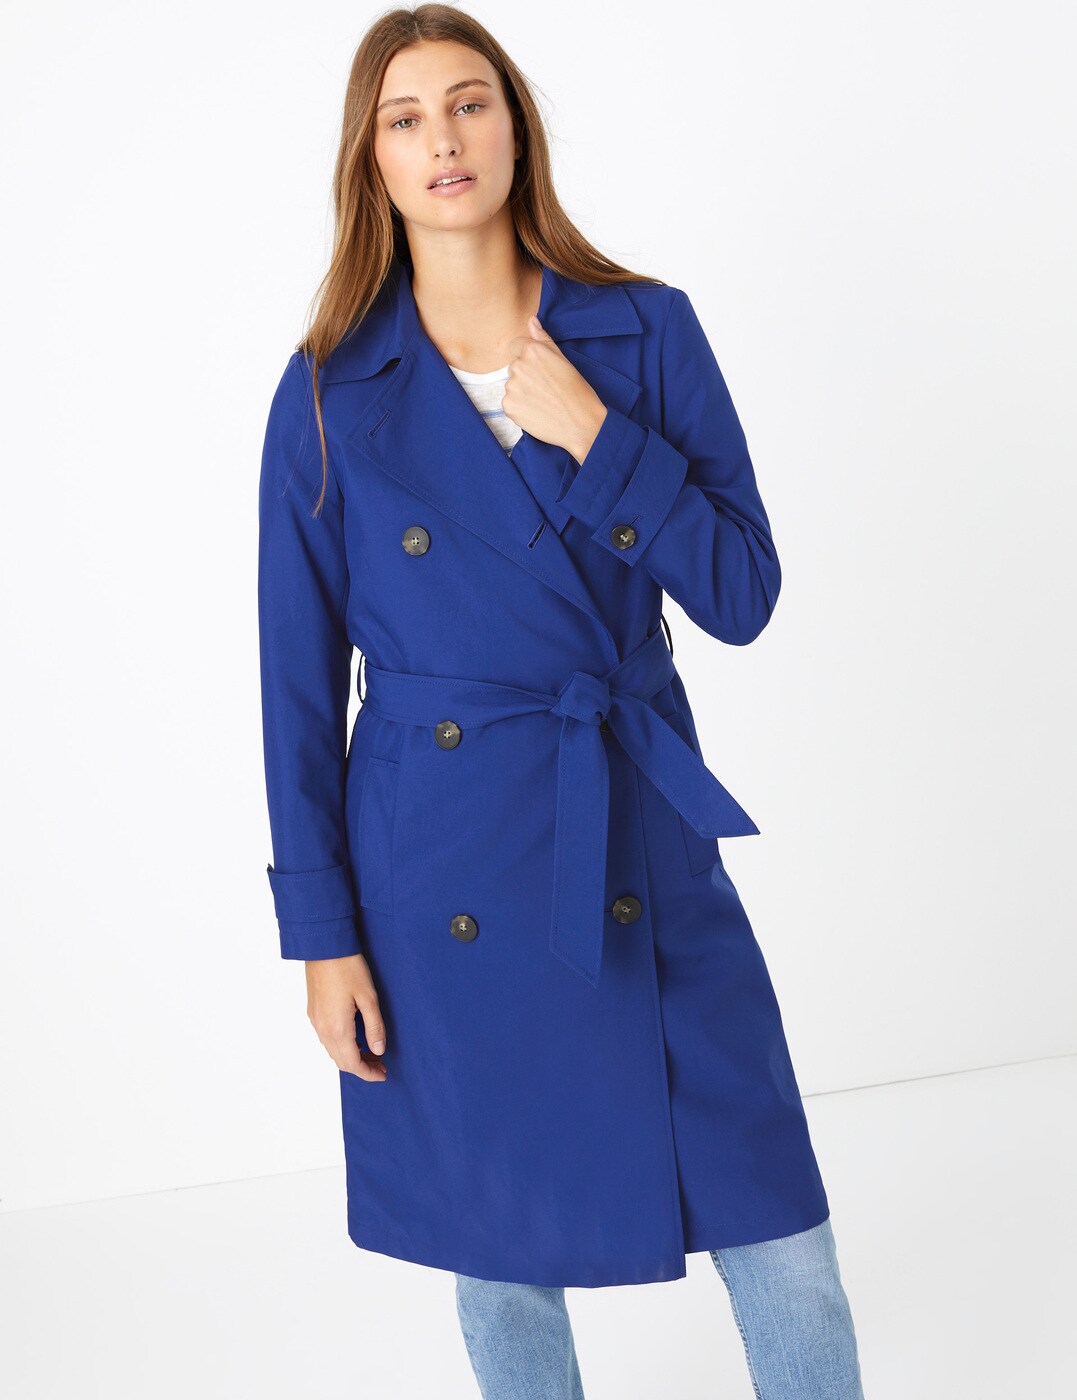 Women's coat Marks & spencer manteau thermowarmth Stormwear Taille 8 Bleu Marine